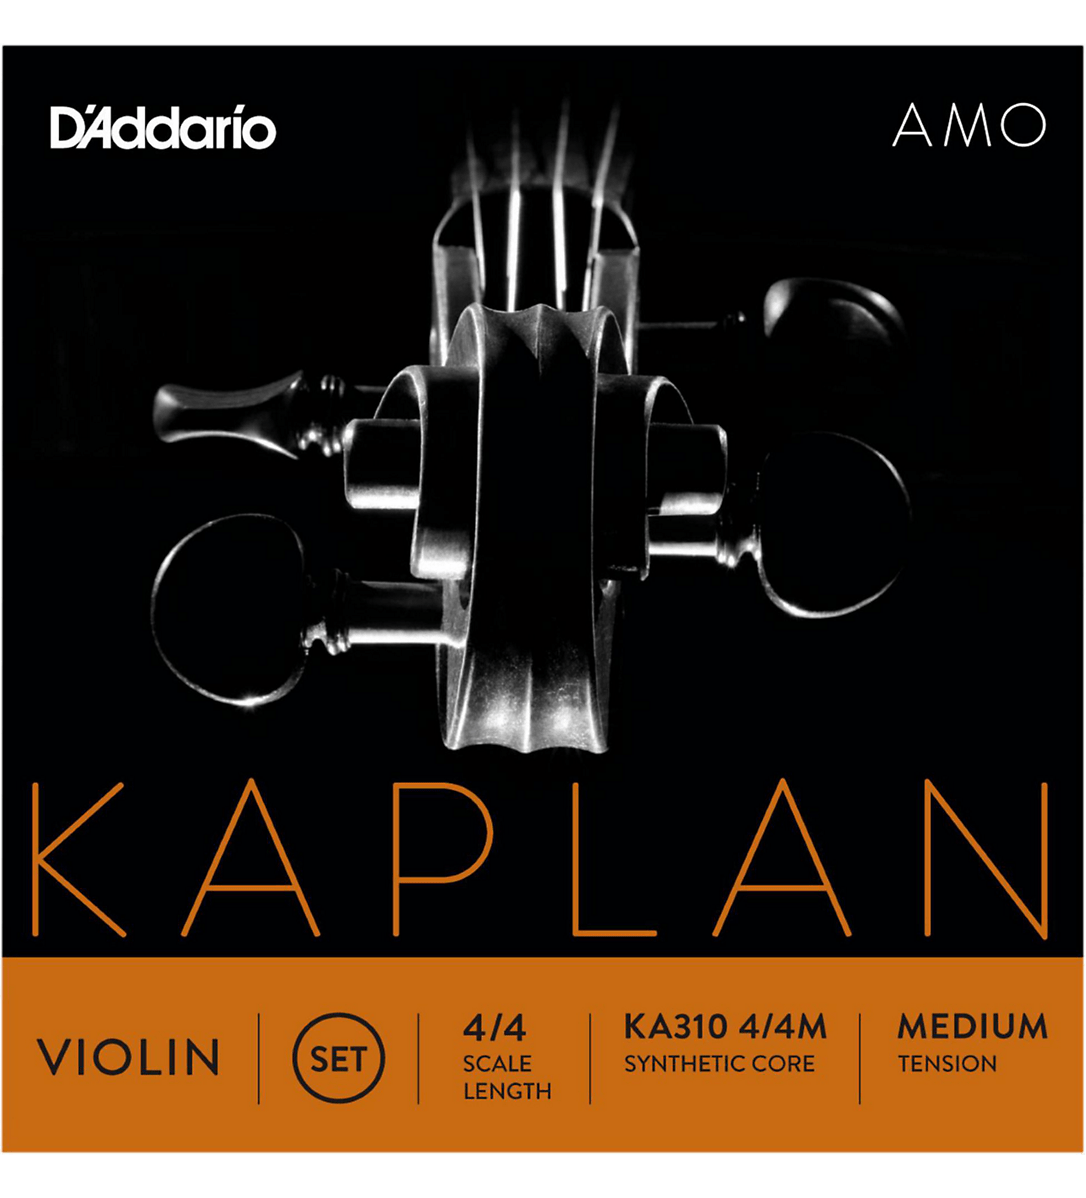 D'addario Kaplan Amo Violin Strings